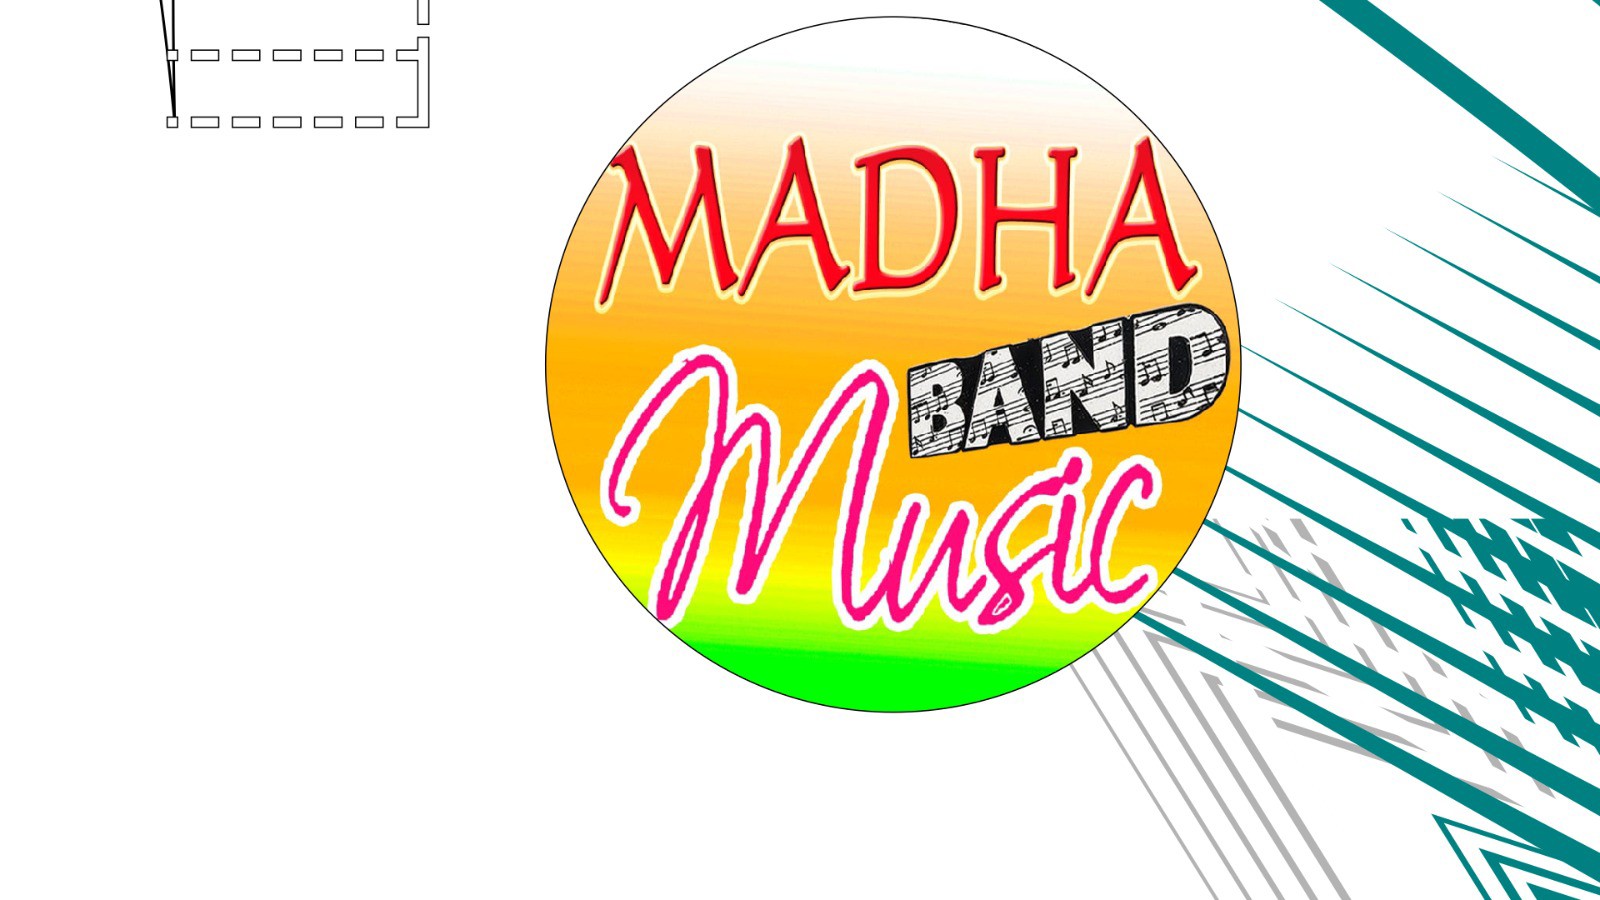 Madha Musical Band